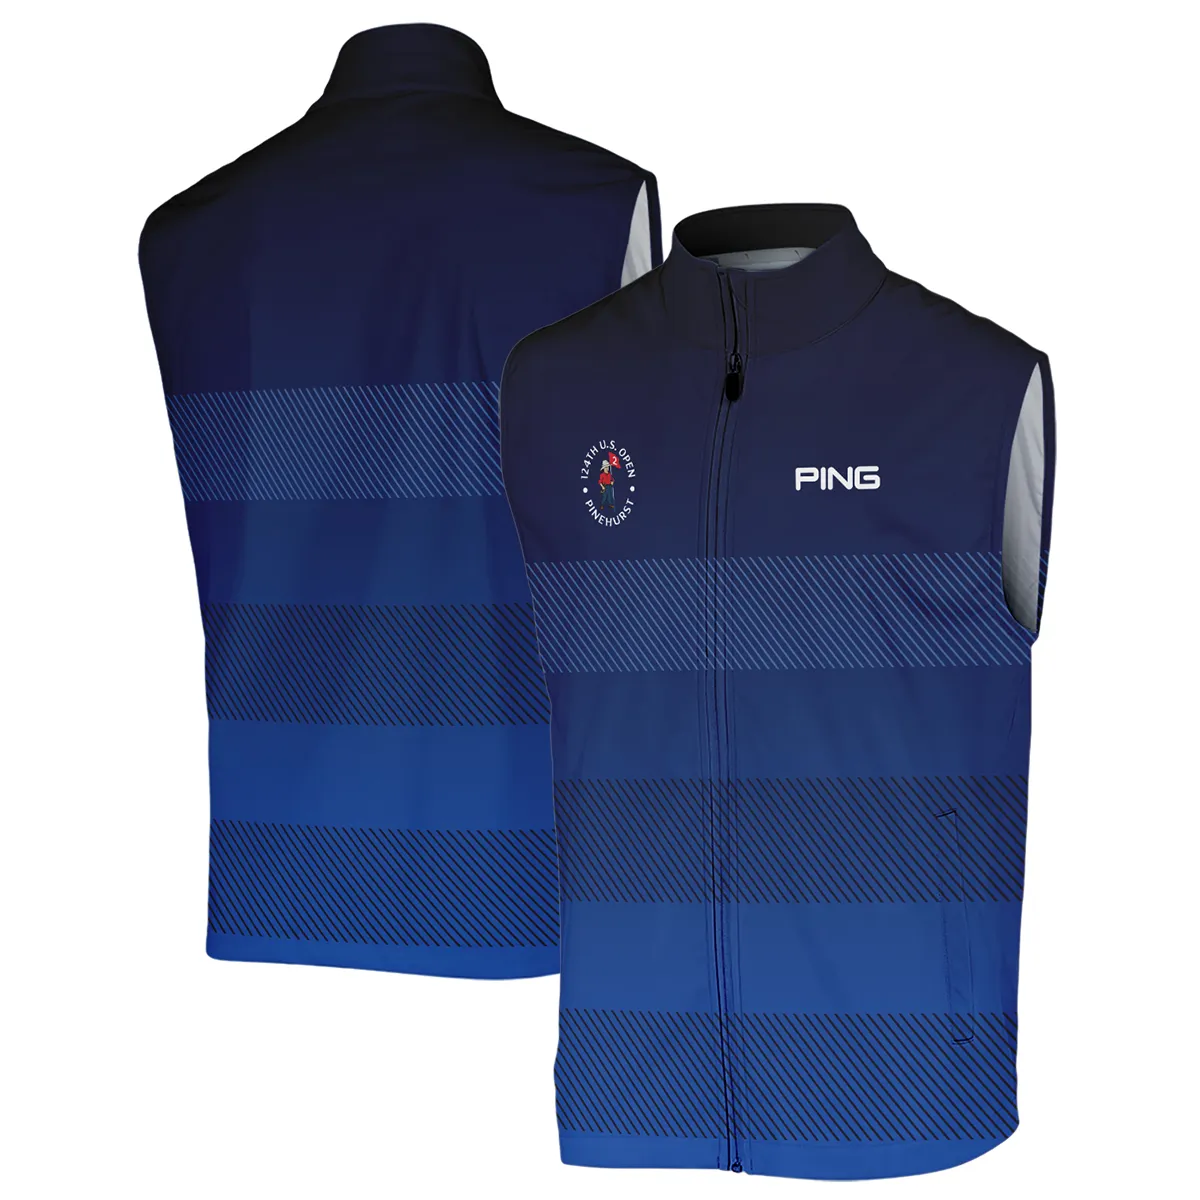 Ping 124th U.S. Open Pinehurst Quarter-Zip Jacket Sports Dark Blue Gradient Striped Pattern All Over Print Quarter-Zip Jacket